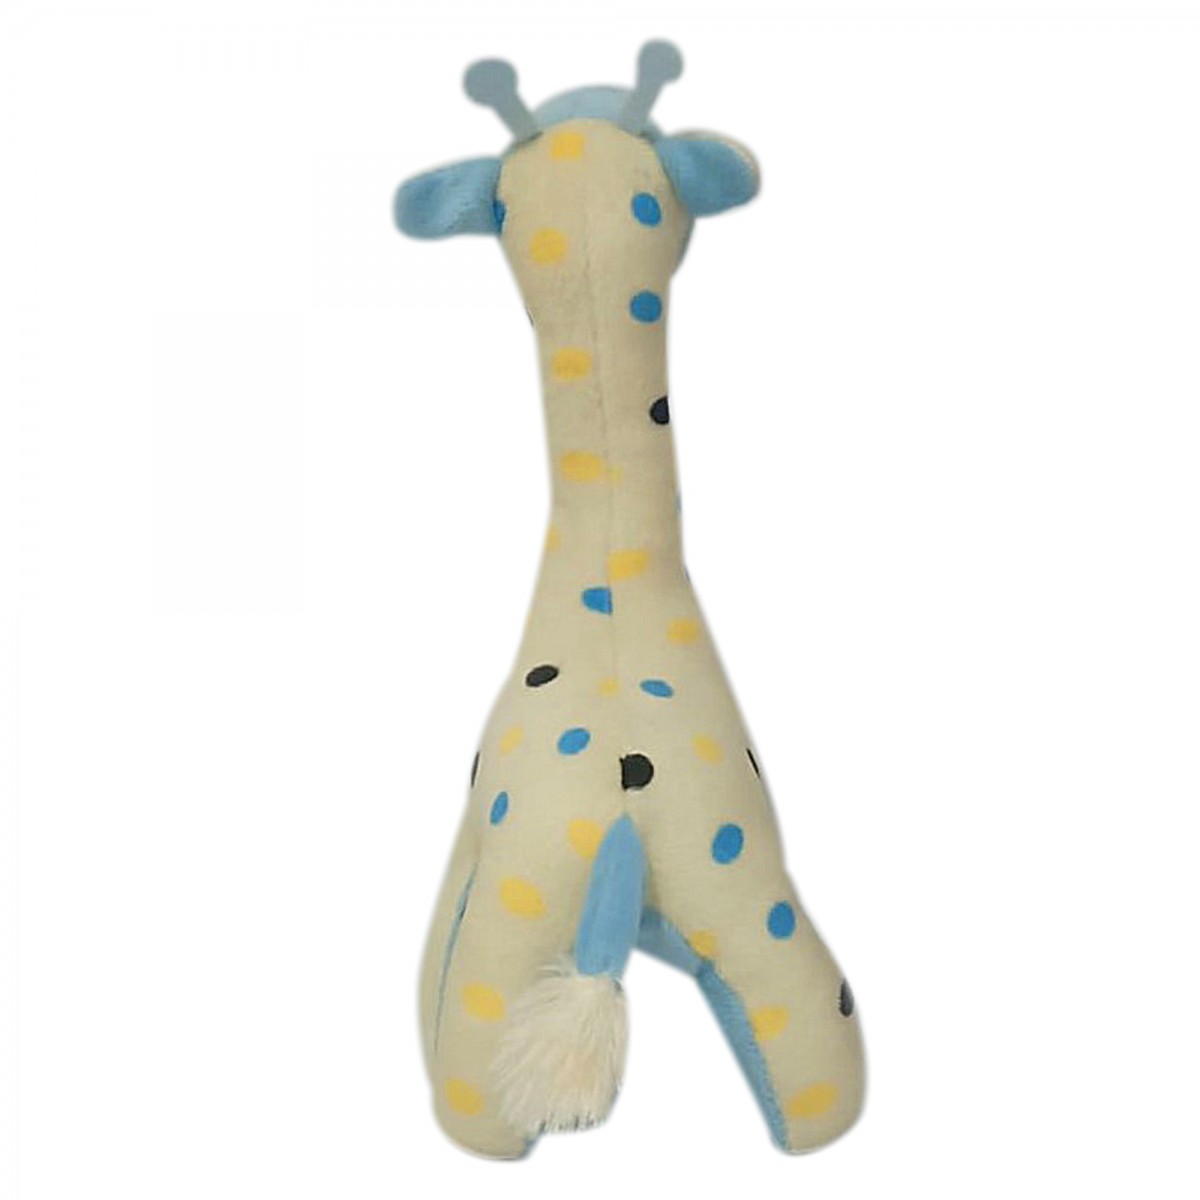 Furrendz Jolly Giraffe 10" Plush Blue for Kids 1 Year and Above